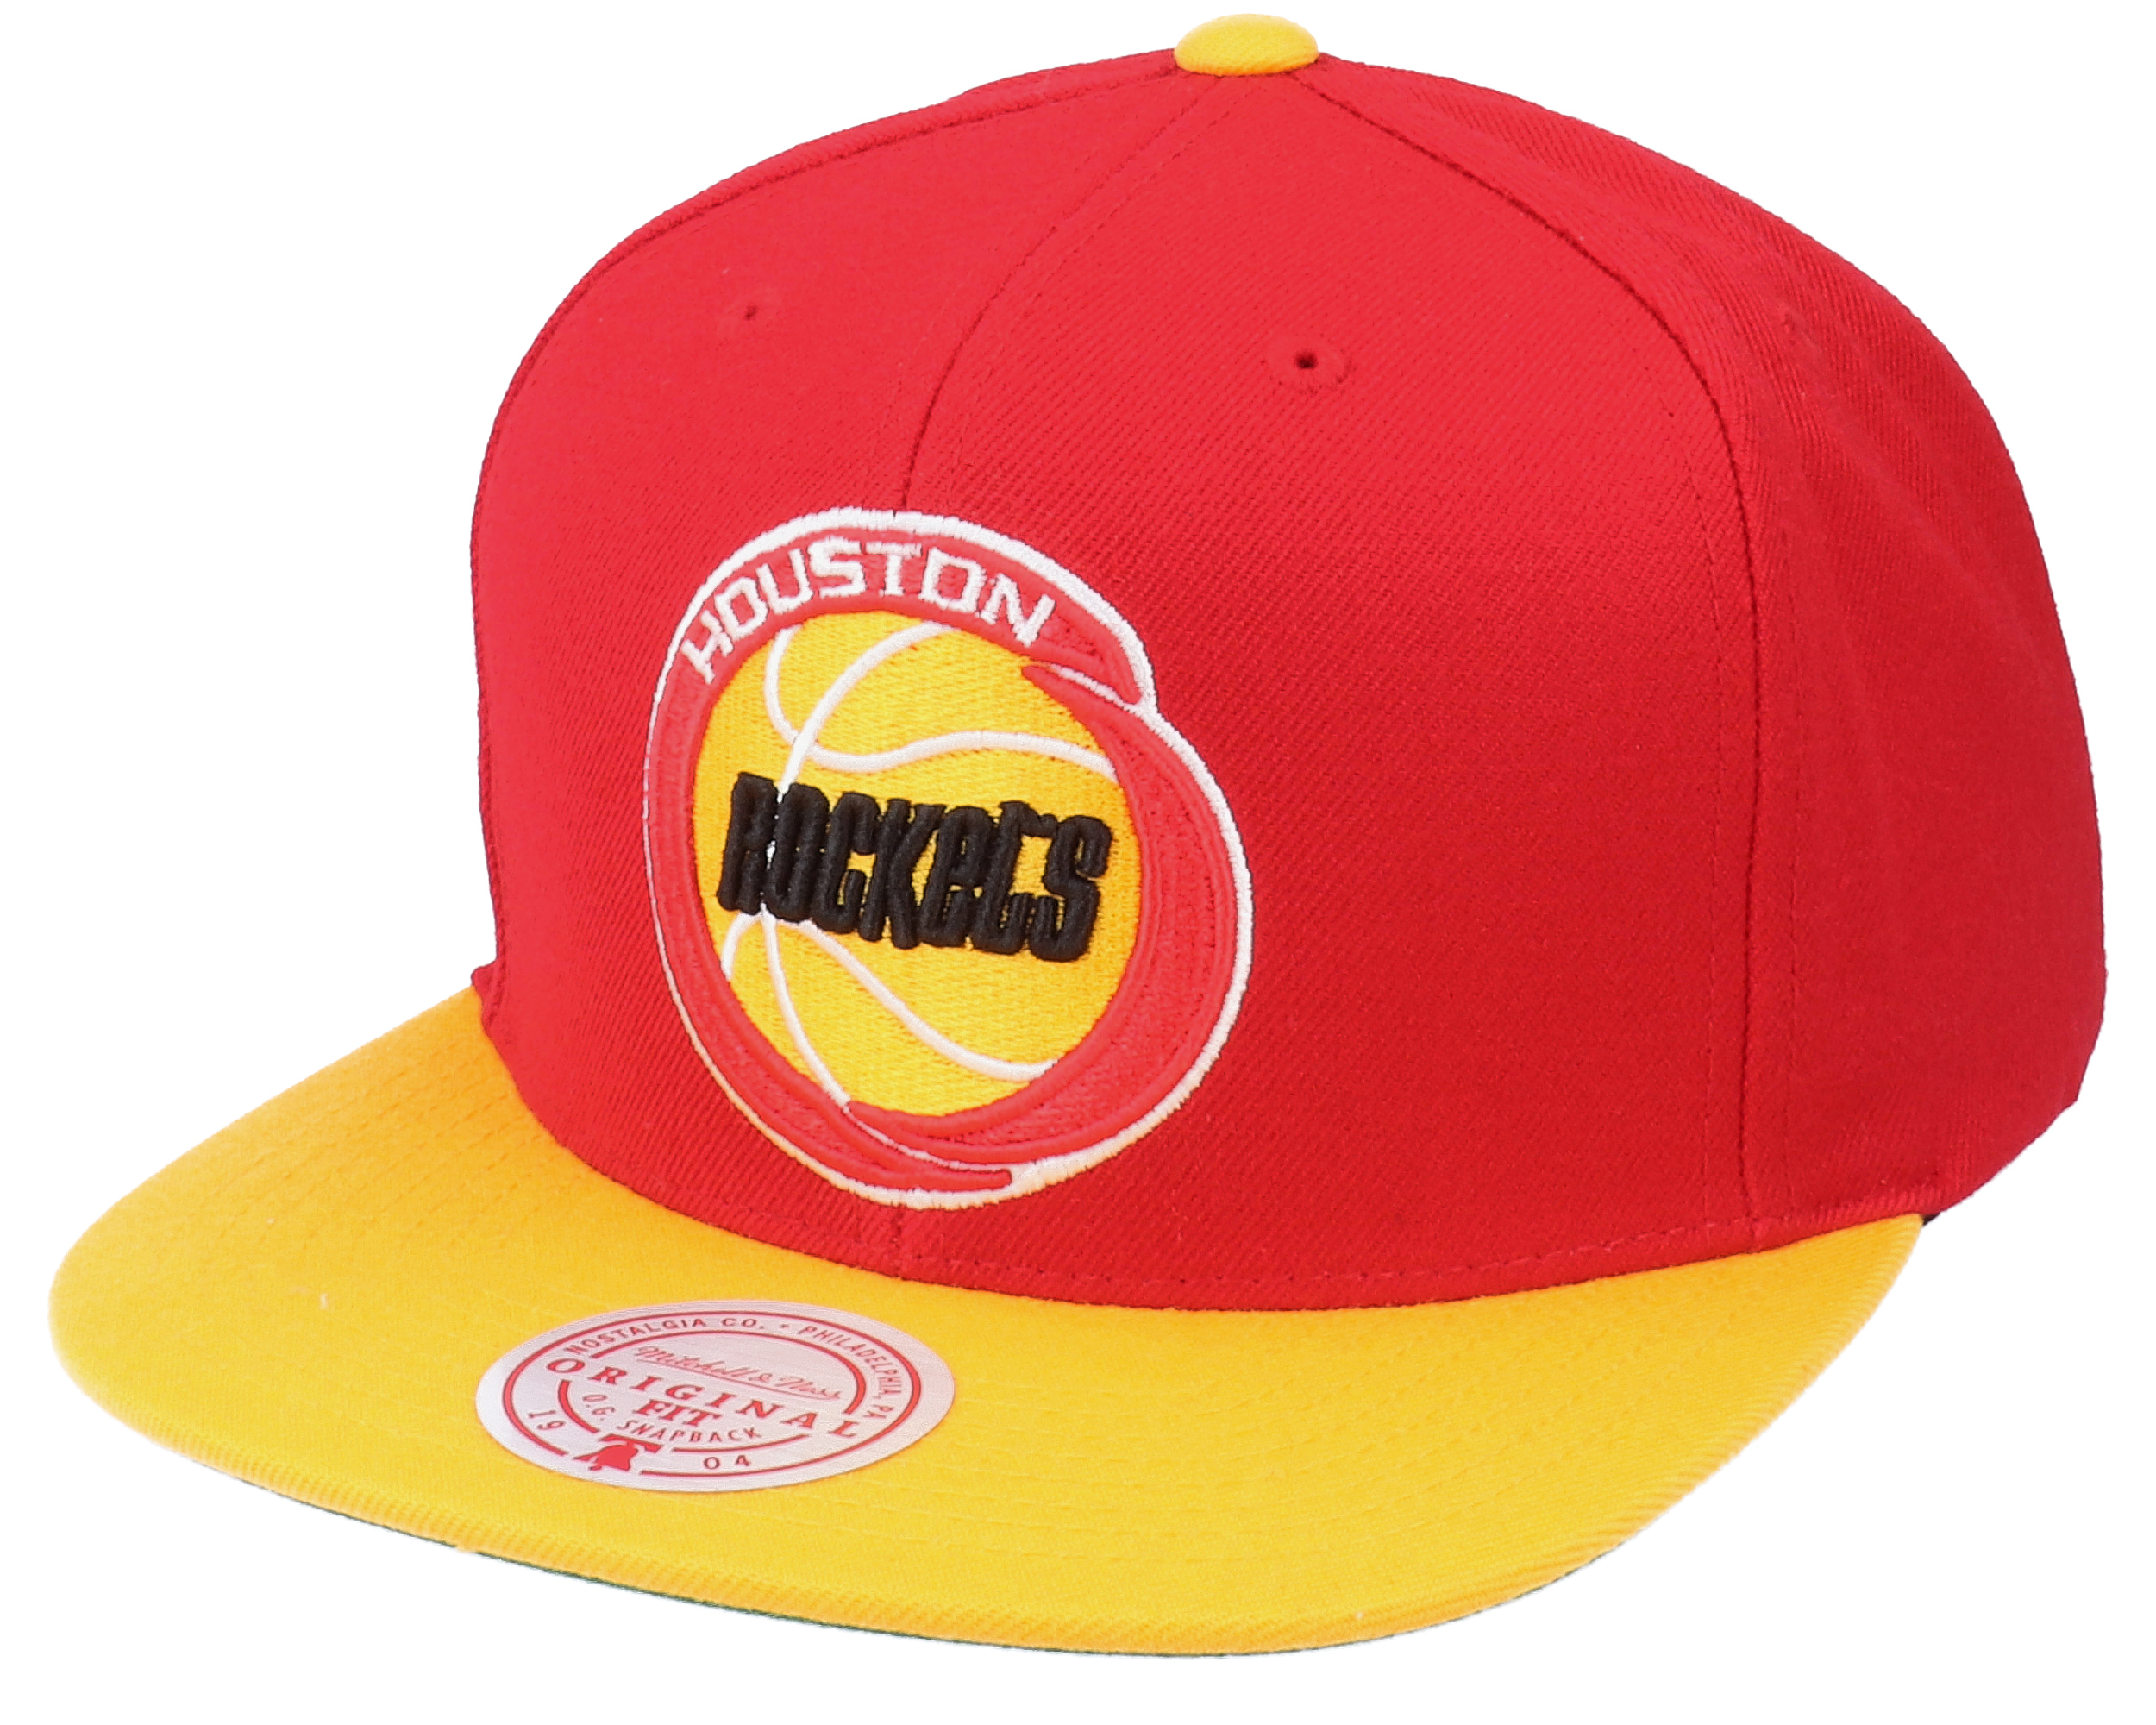 Houston Rockets Wool 2 Tone Hwc Red/Gold Snapback - Mitchell